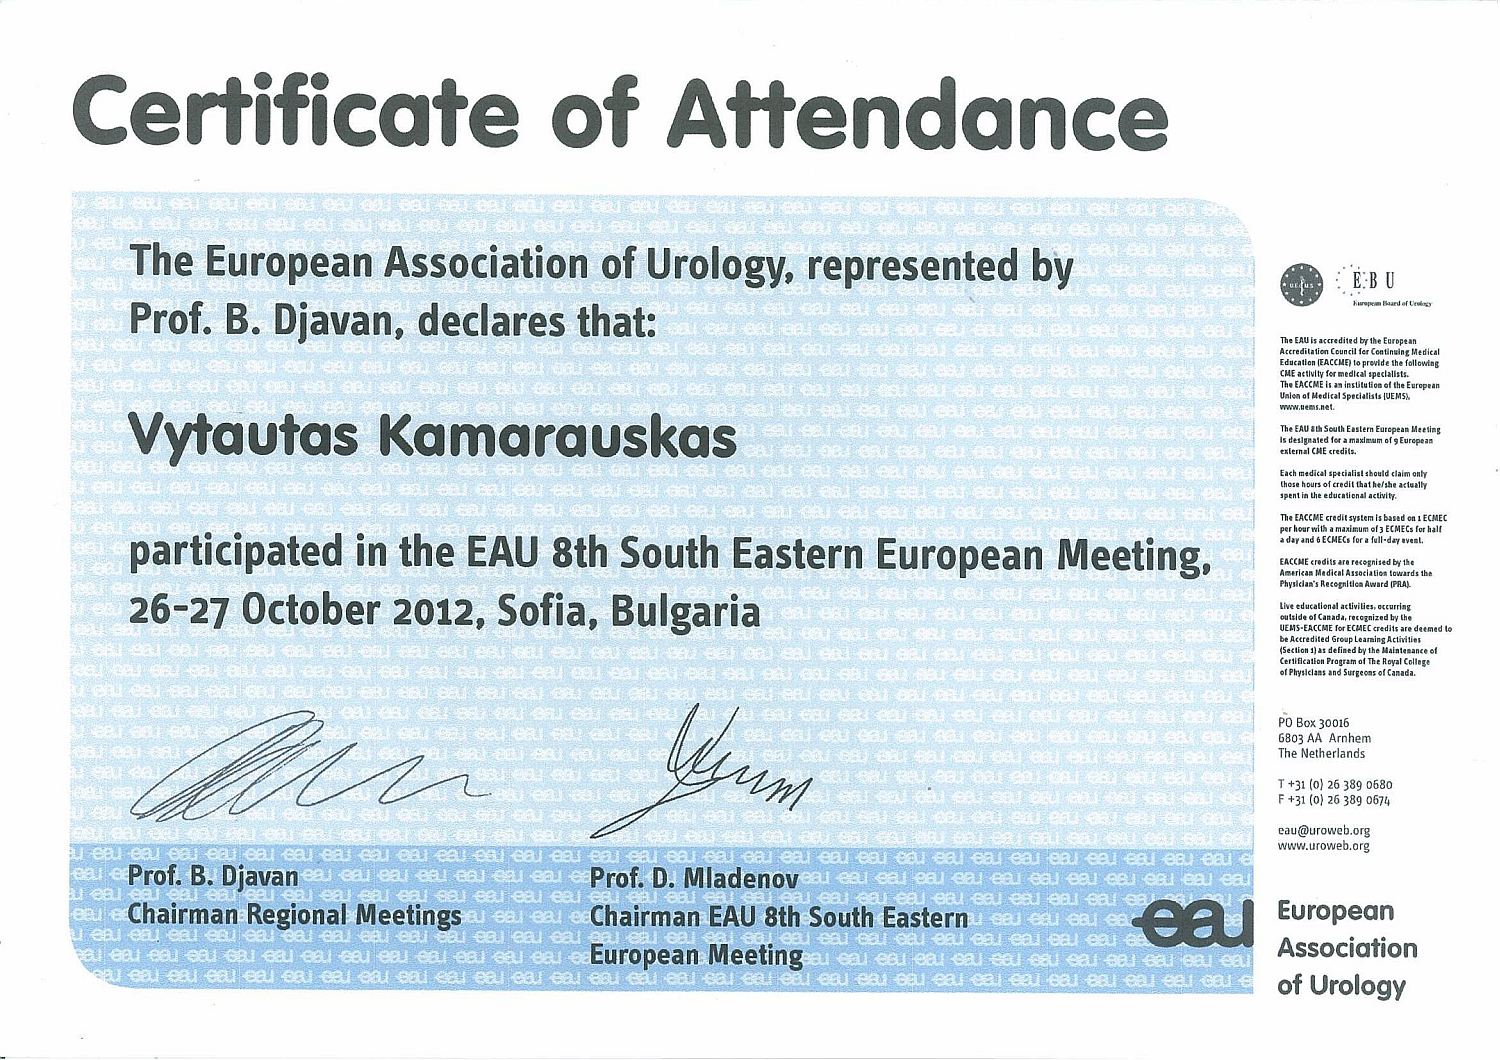 European Association of Urology 8th South Eastern European Meeting in Sofia, 26-27 October 2012